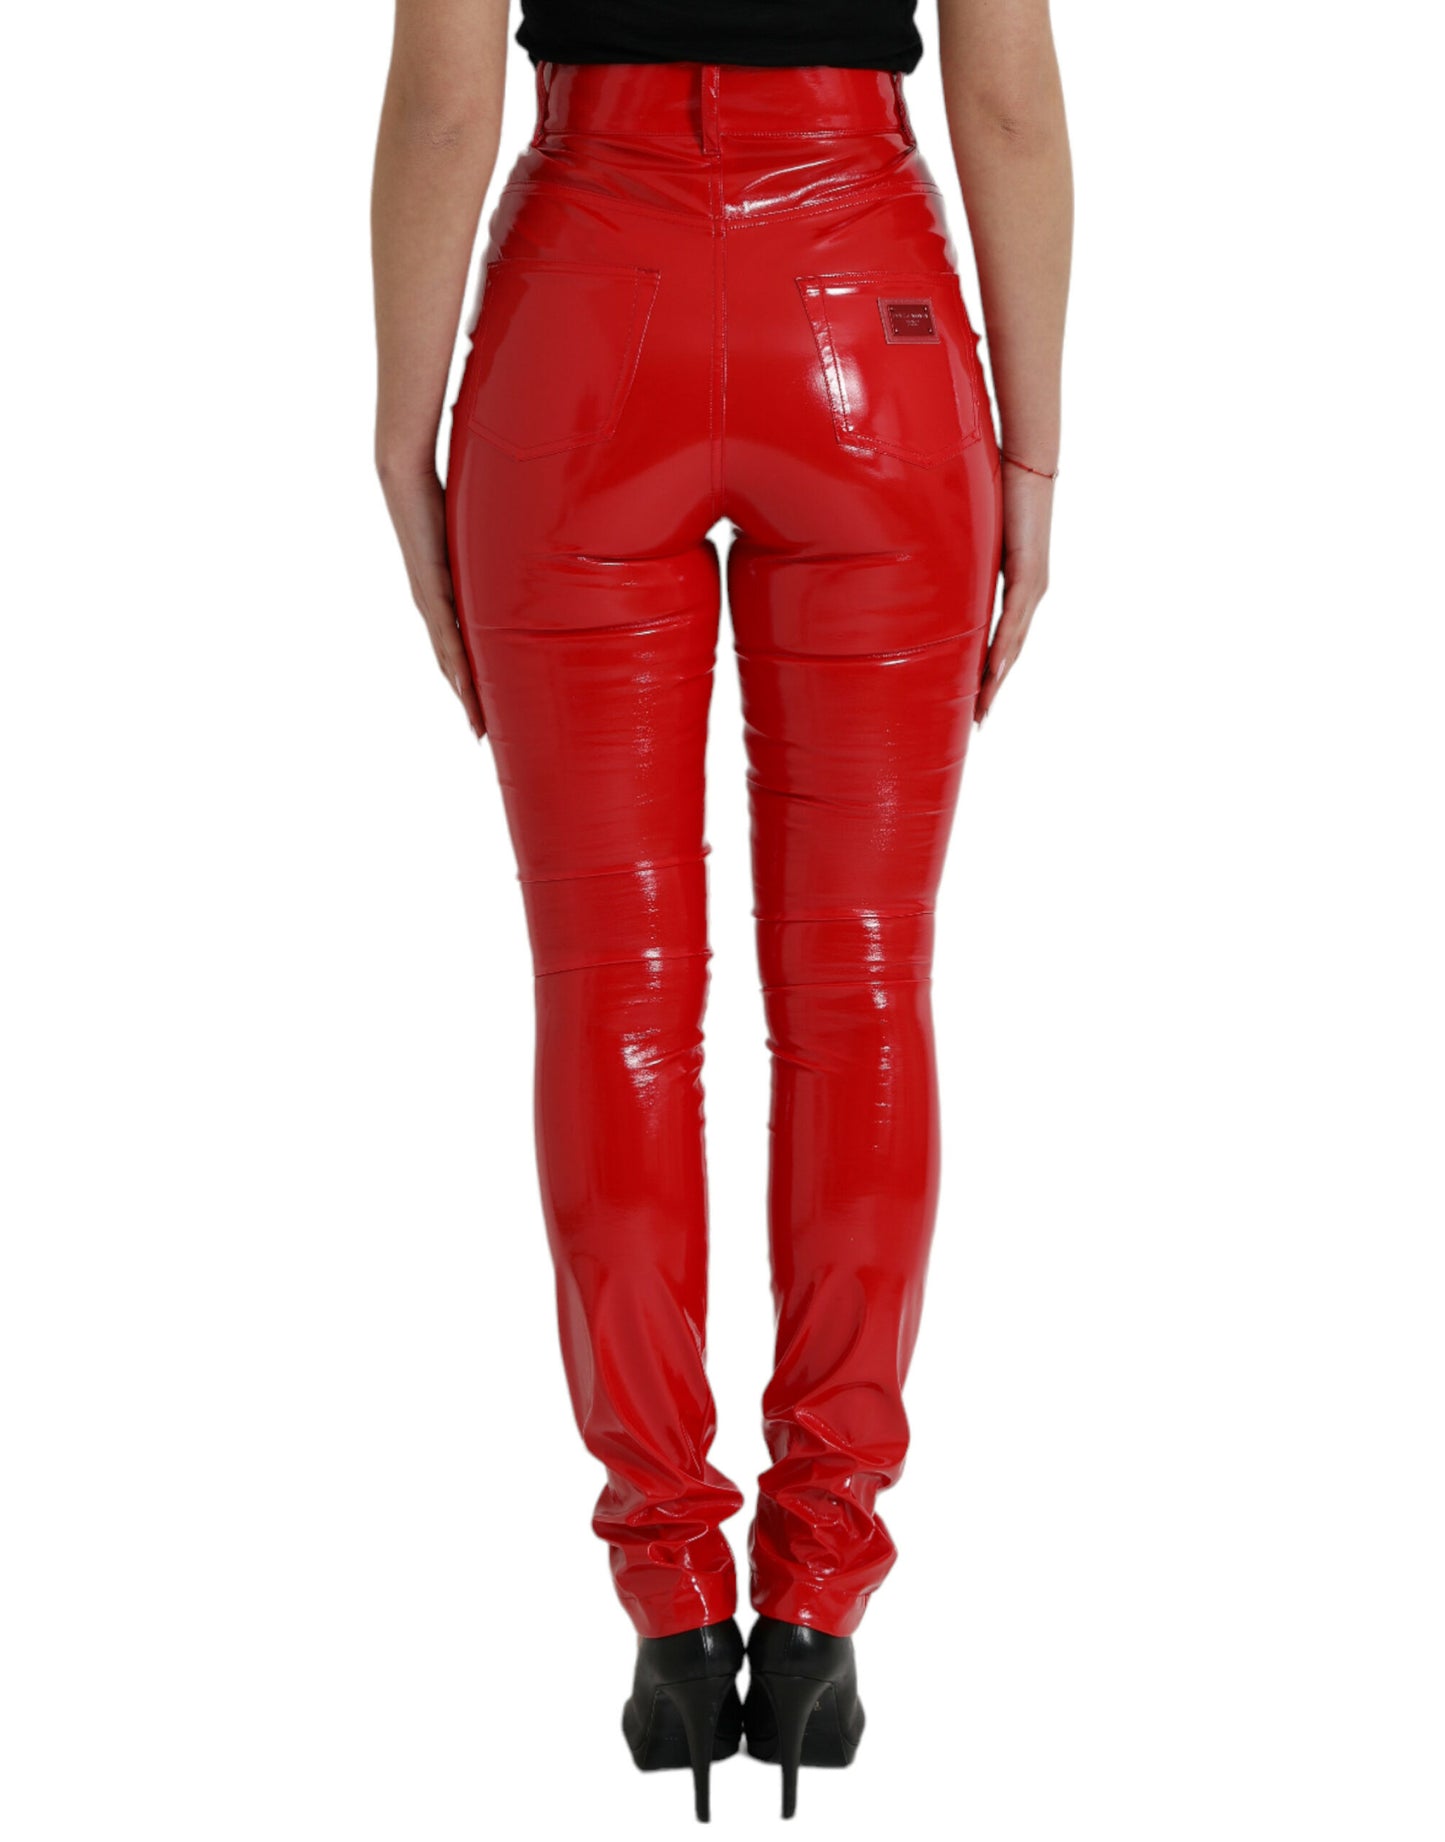 Chic Red High Waist Skinny Pants